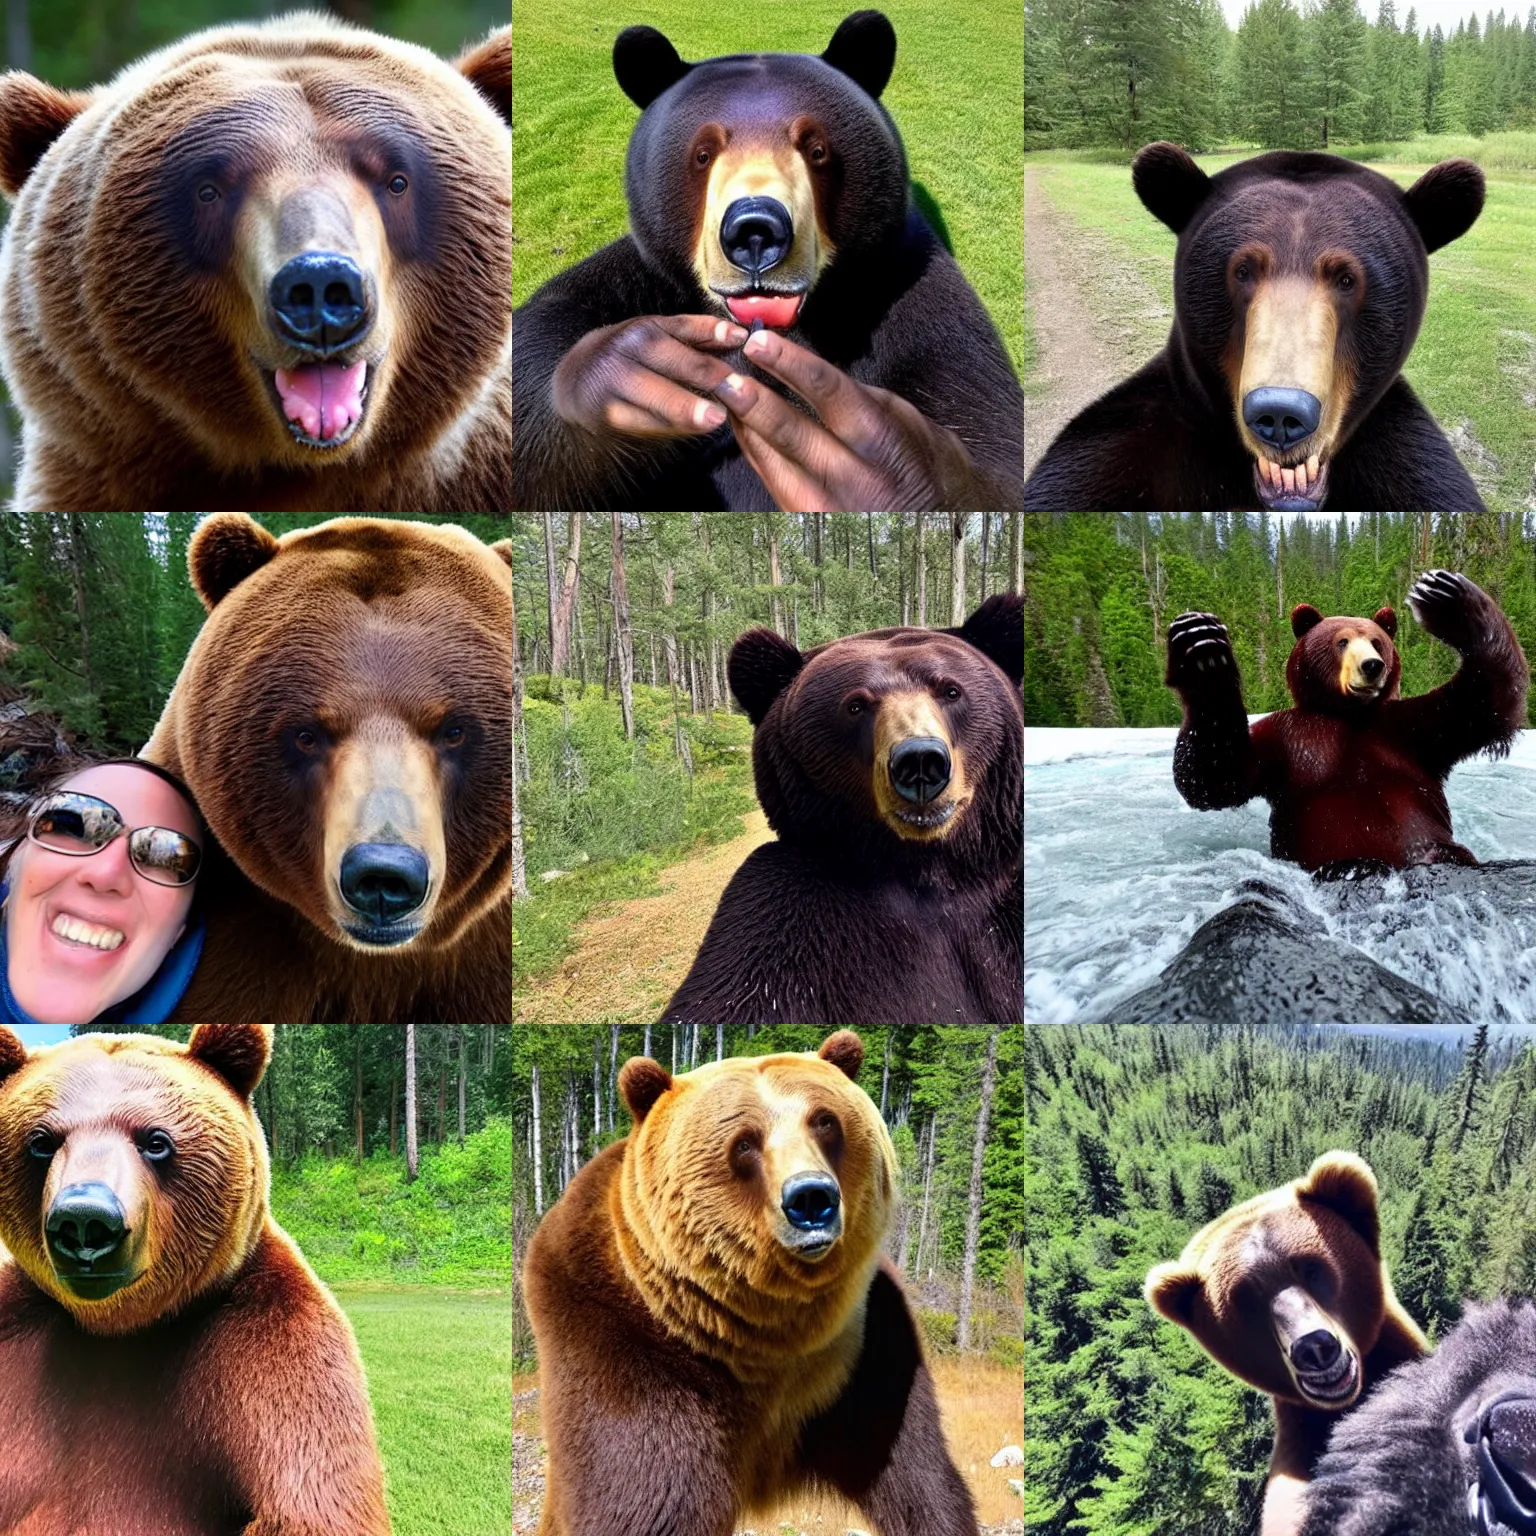 Prompt: bear selfie